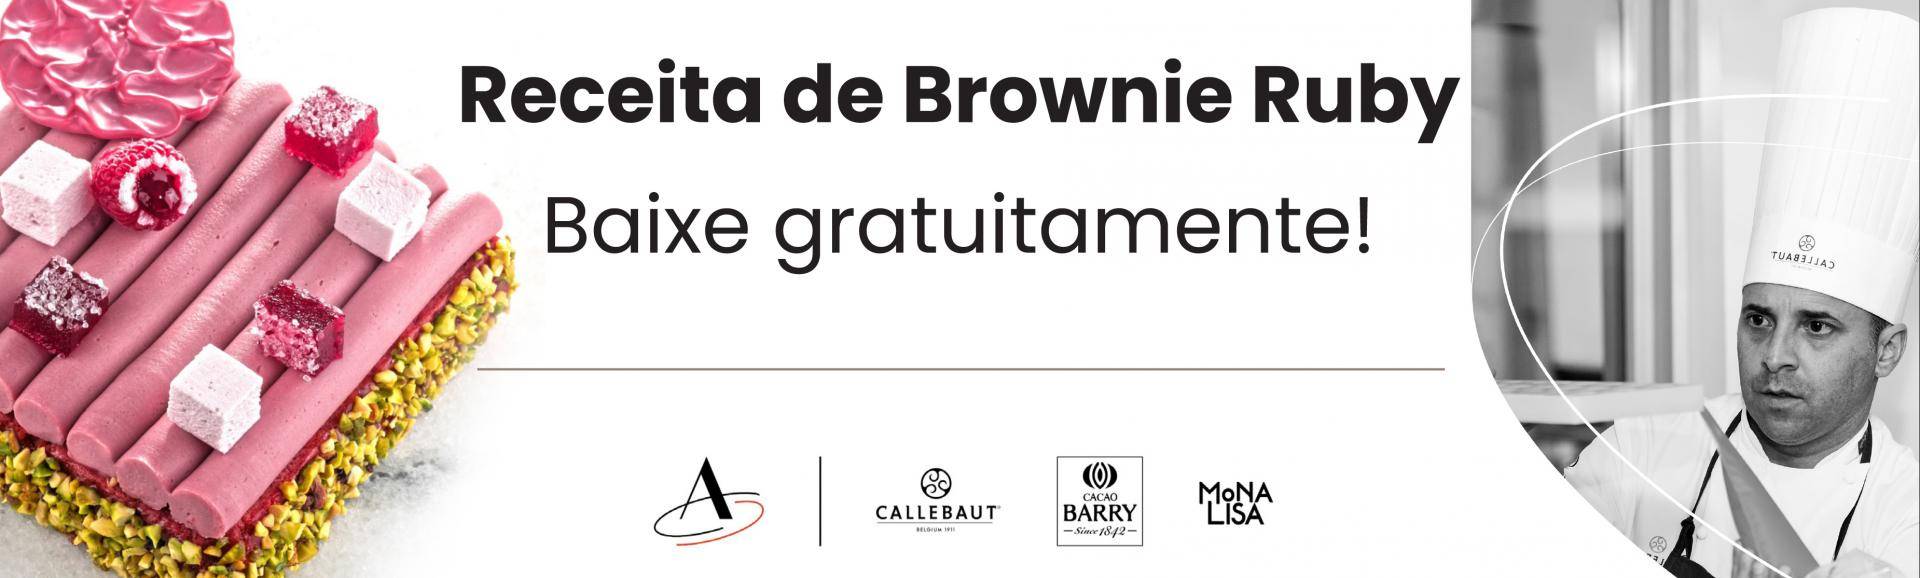 banner-brownie-chocolate-ruby-bertrand-busquet